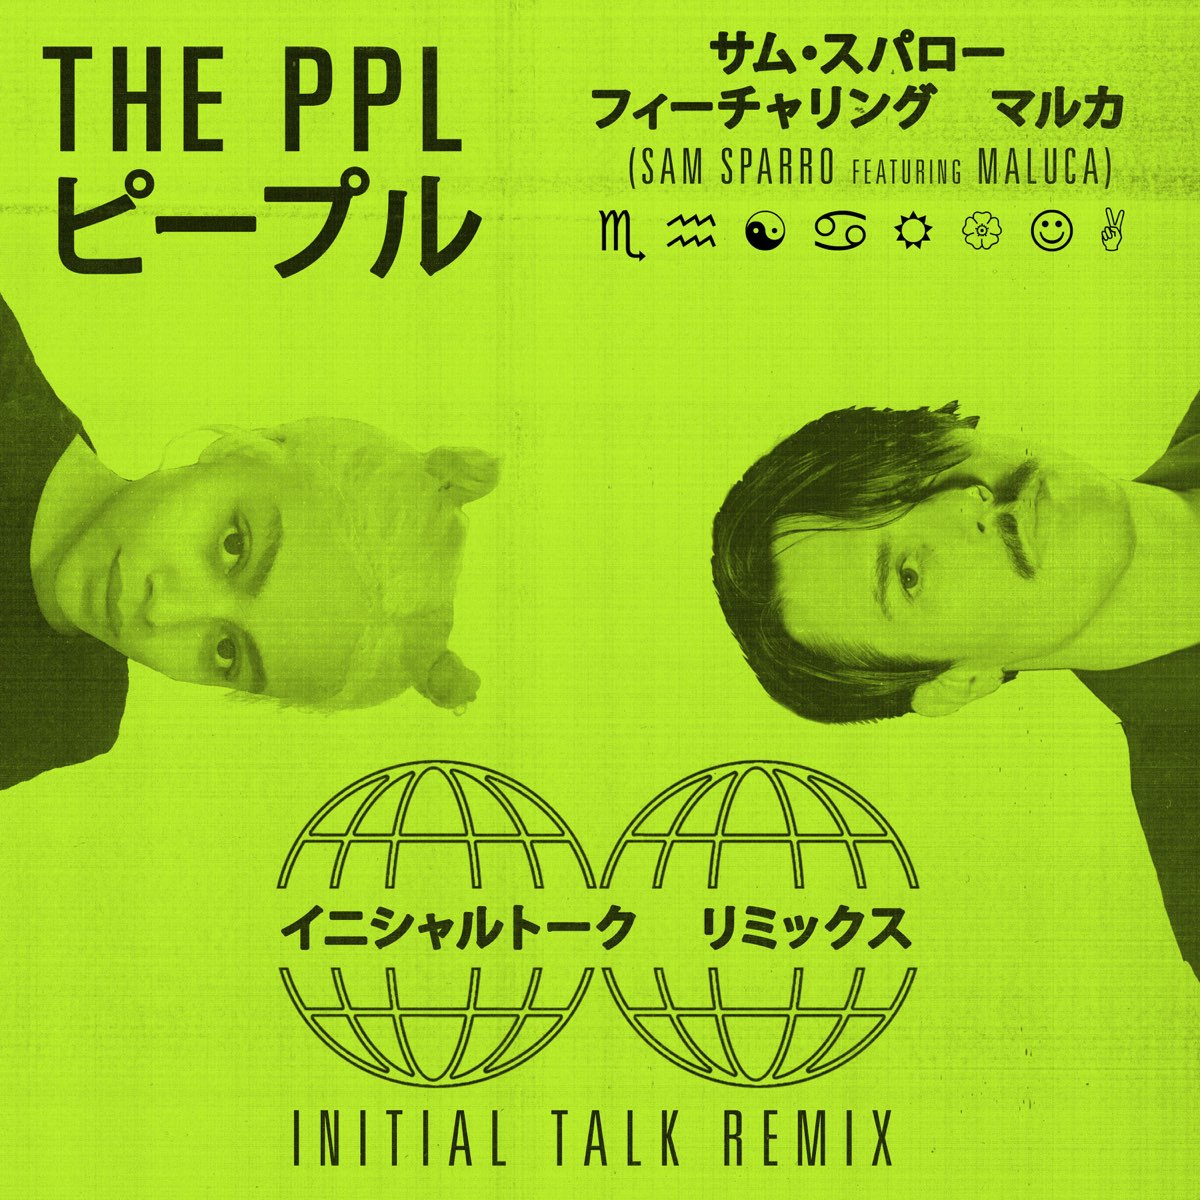 Sam Sparro featuring Maluca — THE PPL cover artwork